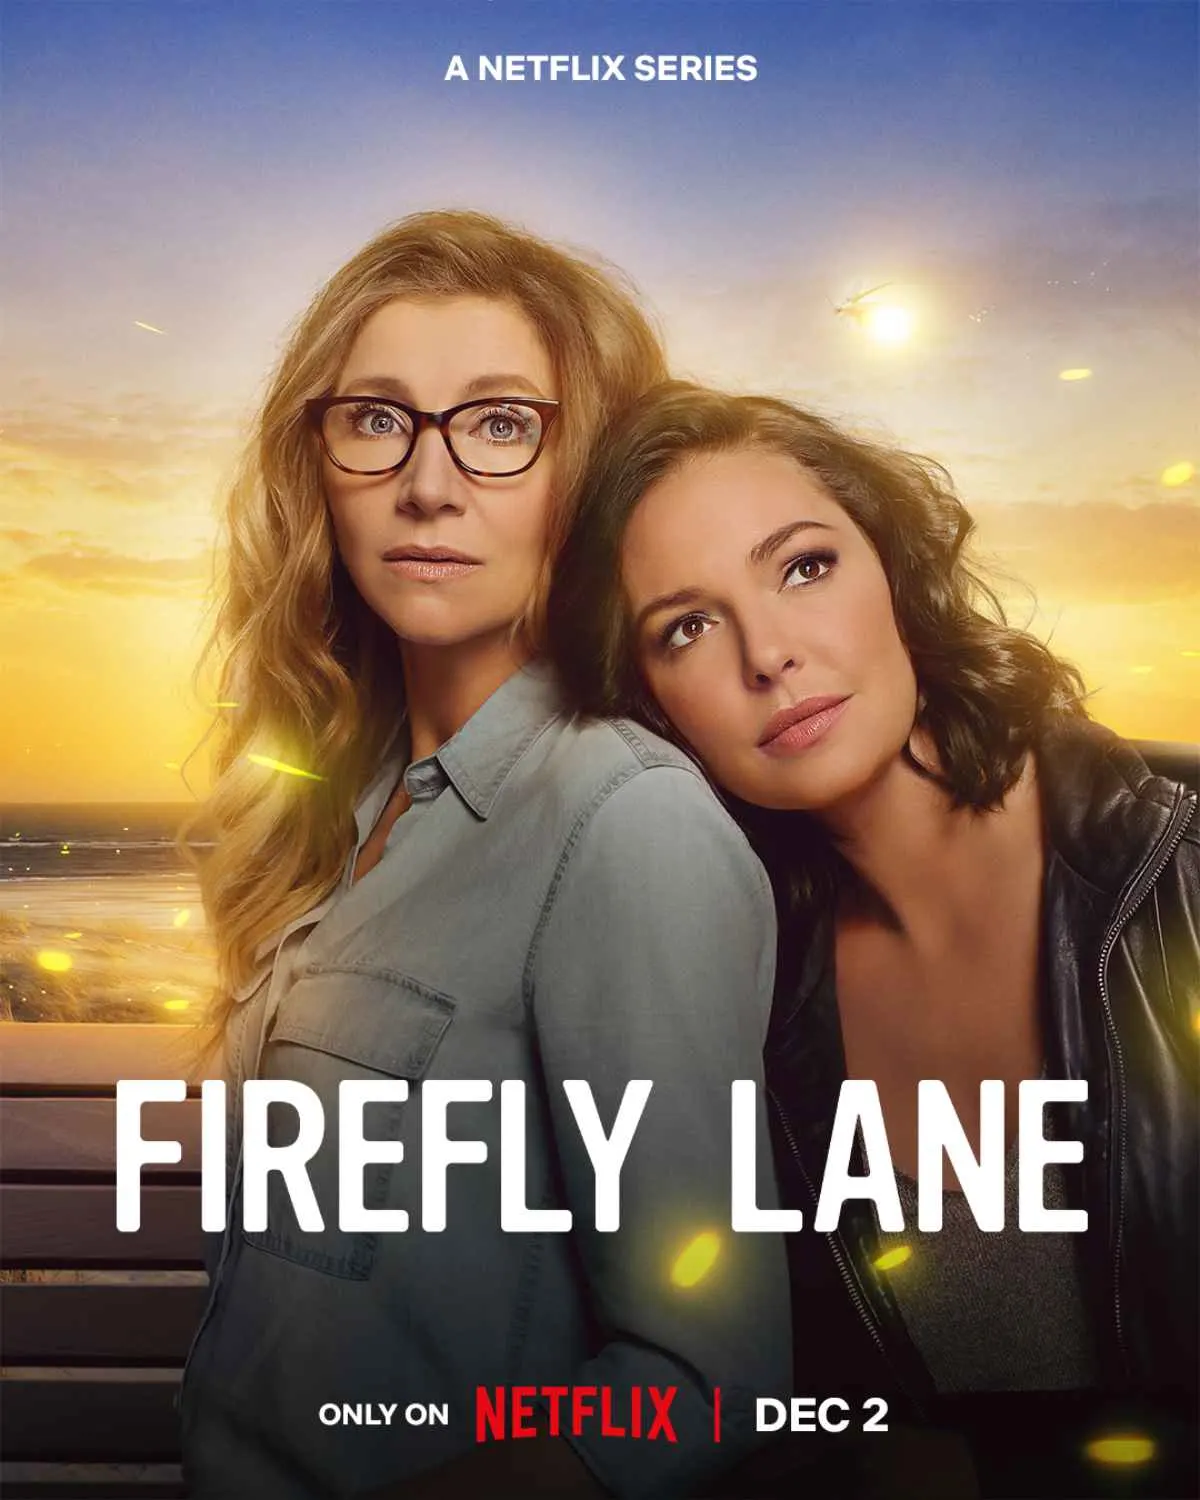 Firefly Lane Season 2